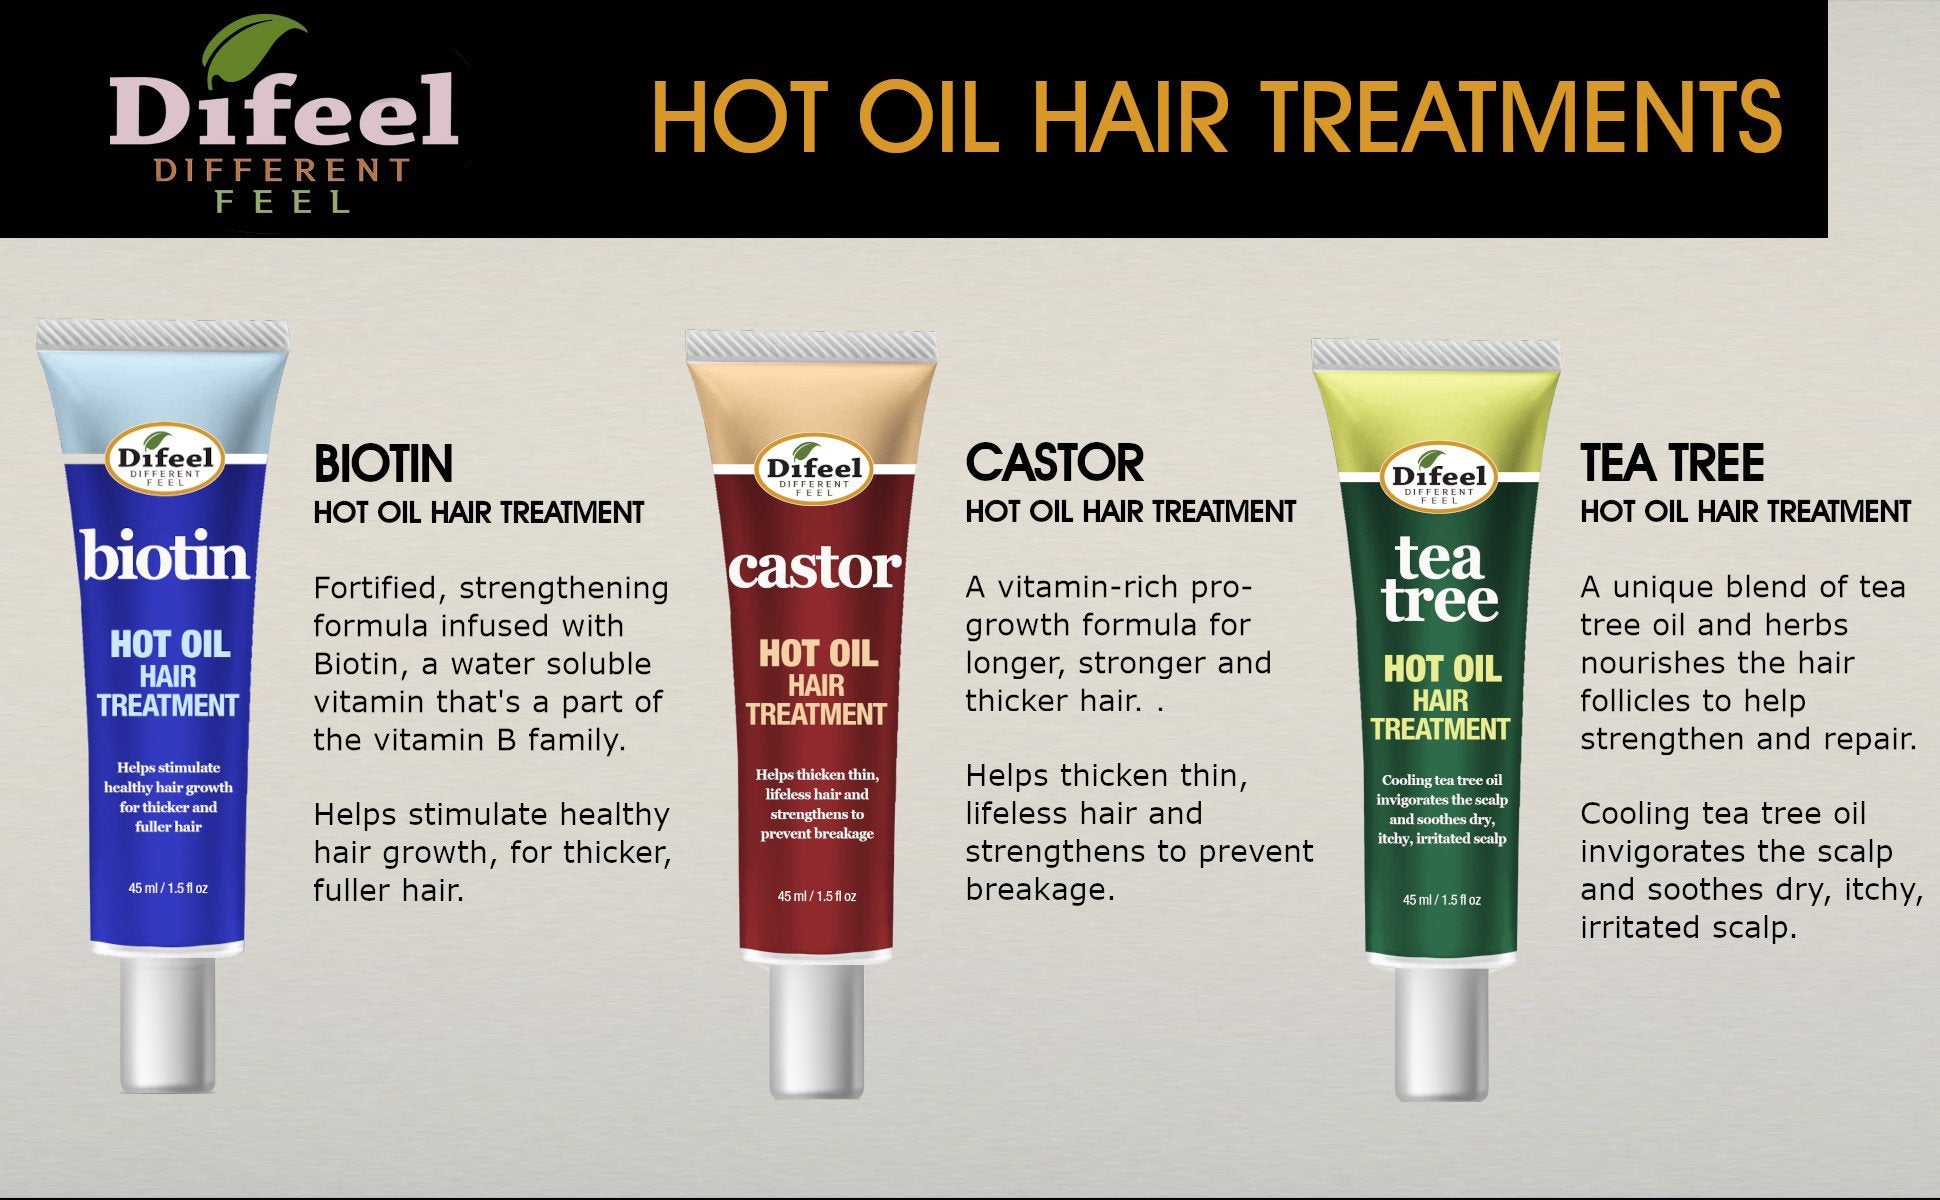 Difeel Hot Oil Hair Treatment with Castor Oil 1.5 oz. (Pack of 2)